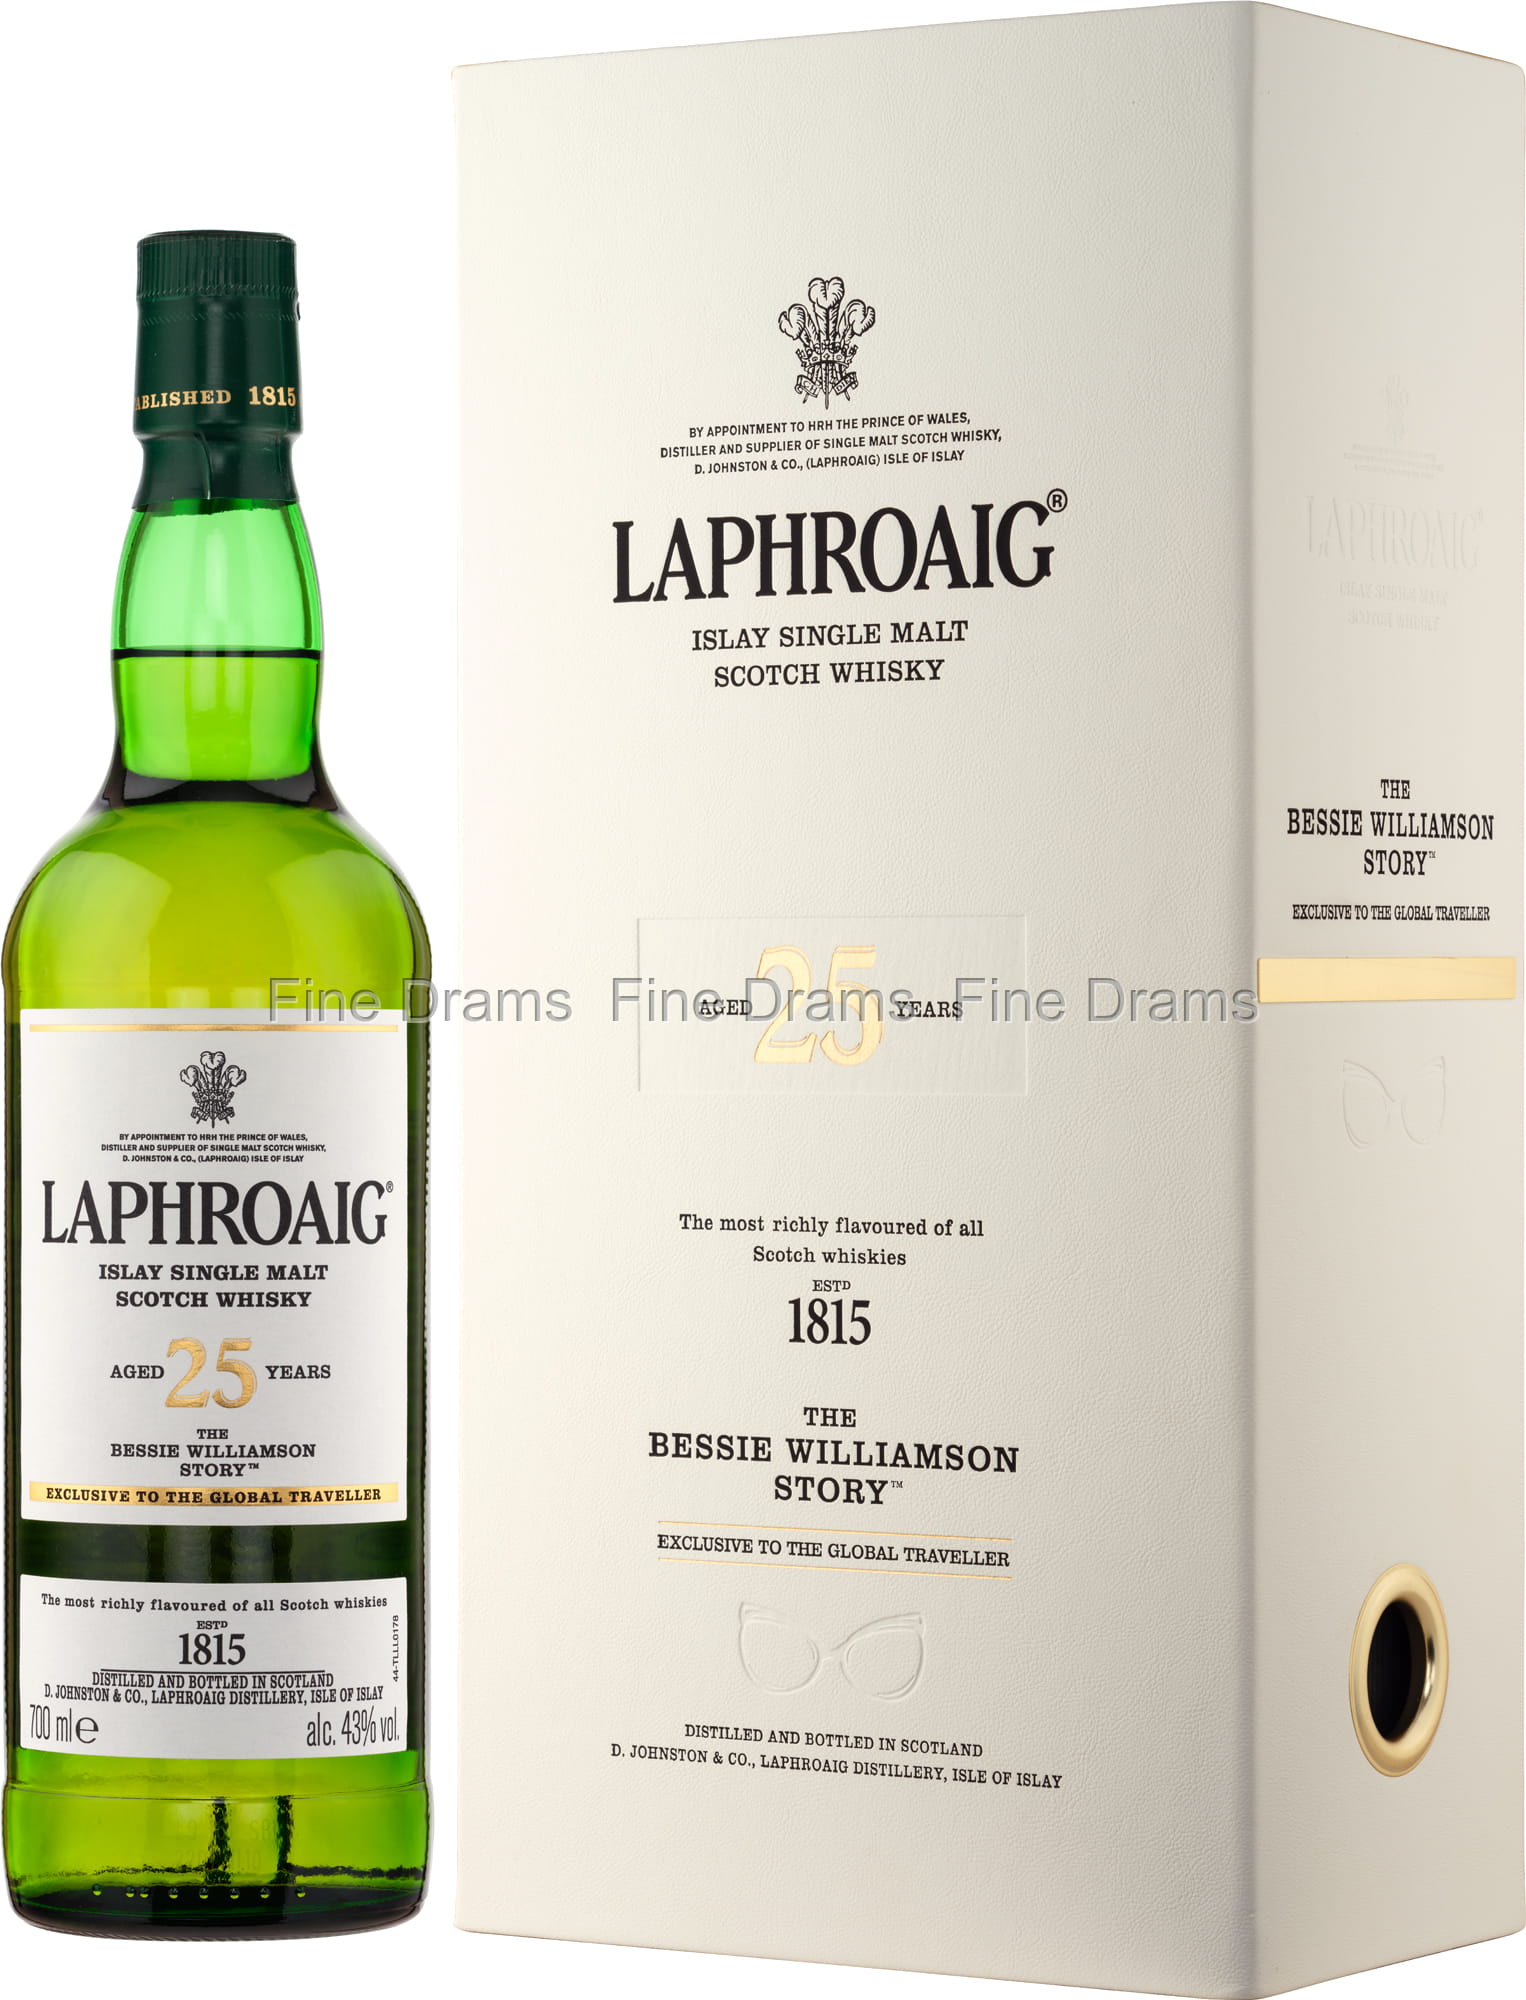 Laphroaig 25 Year Old Whisky - The Bessie Williamson